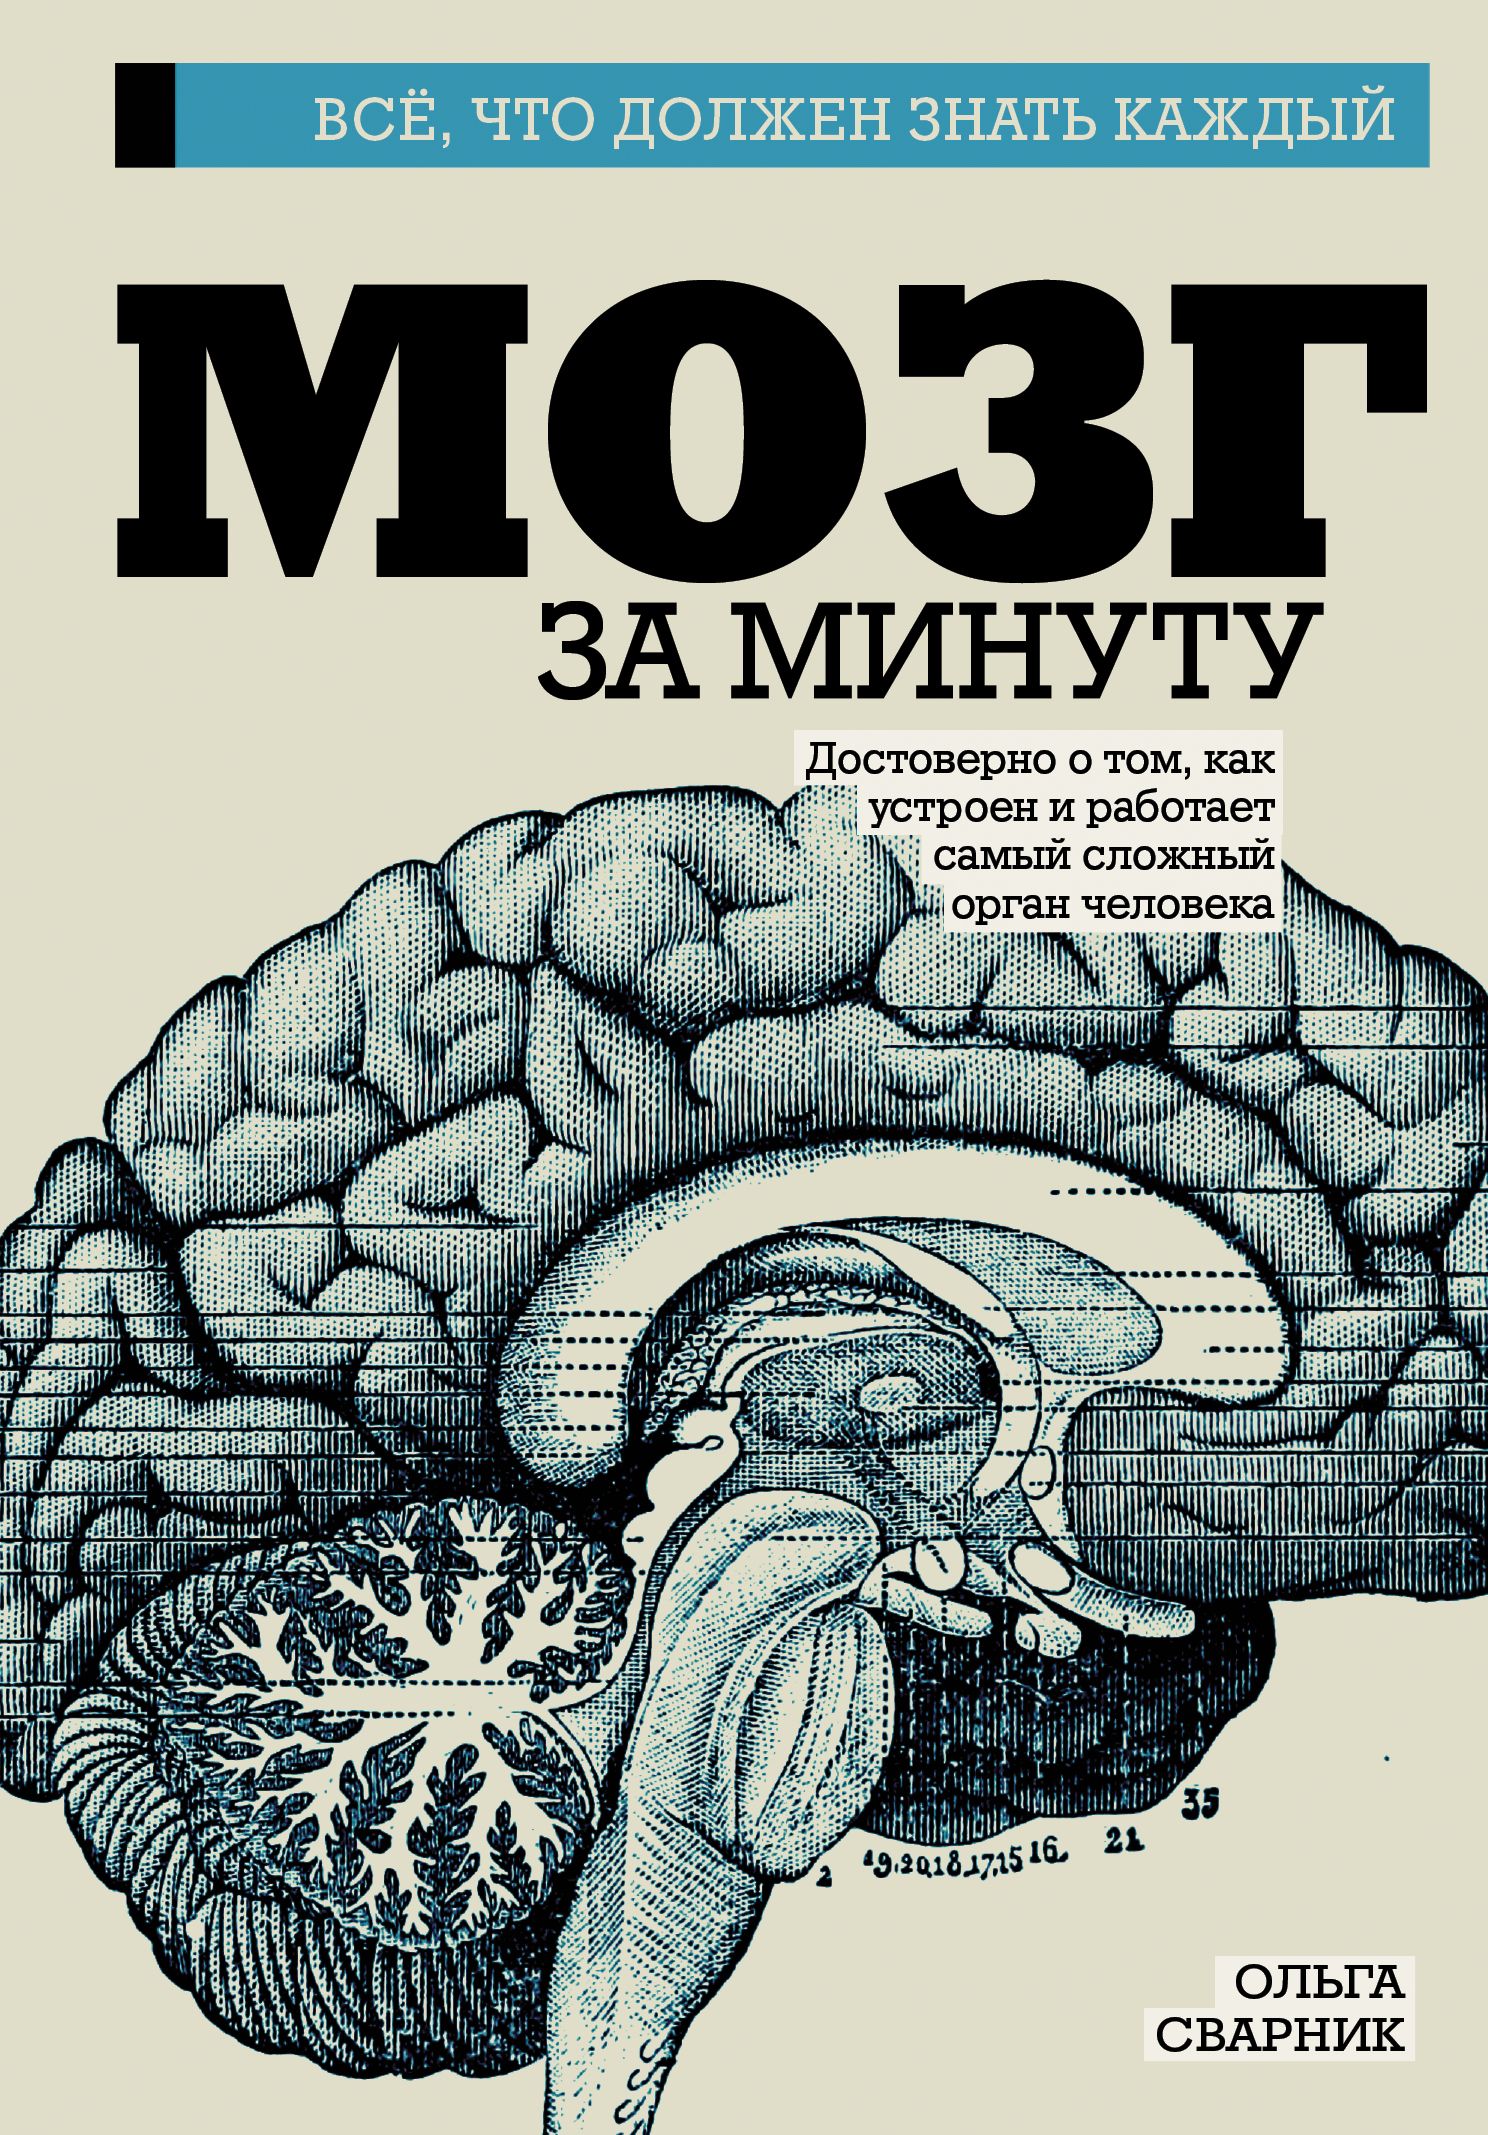 Book brain. Книга мозг. Книга про мозг человека. Мозг за минуту книга.